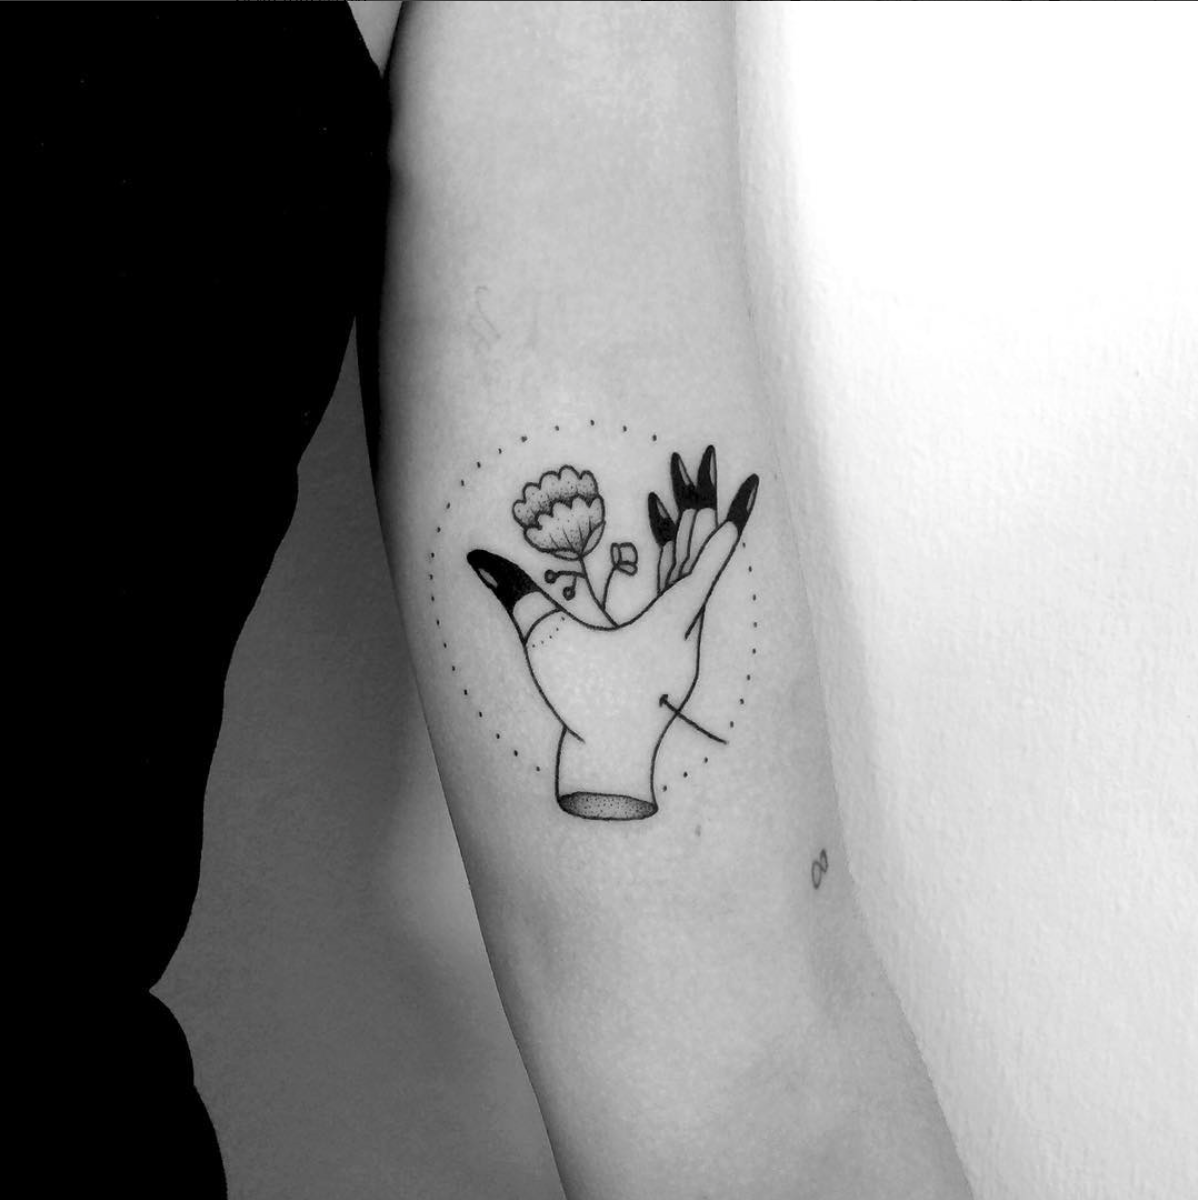 Tami_Hopf, les tatouages faits de points